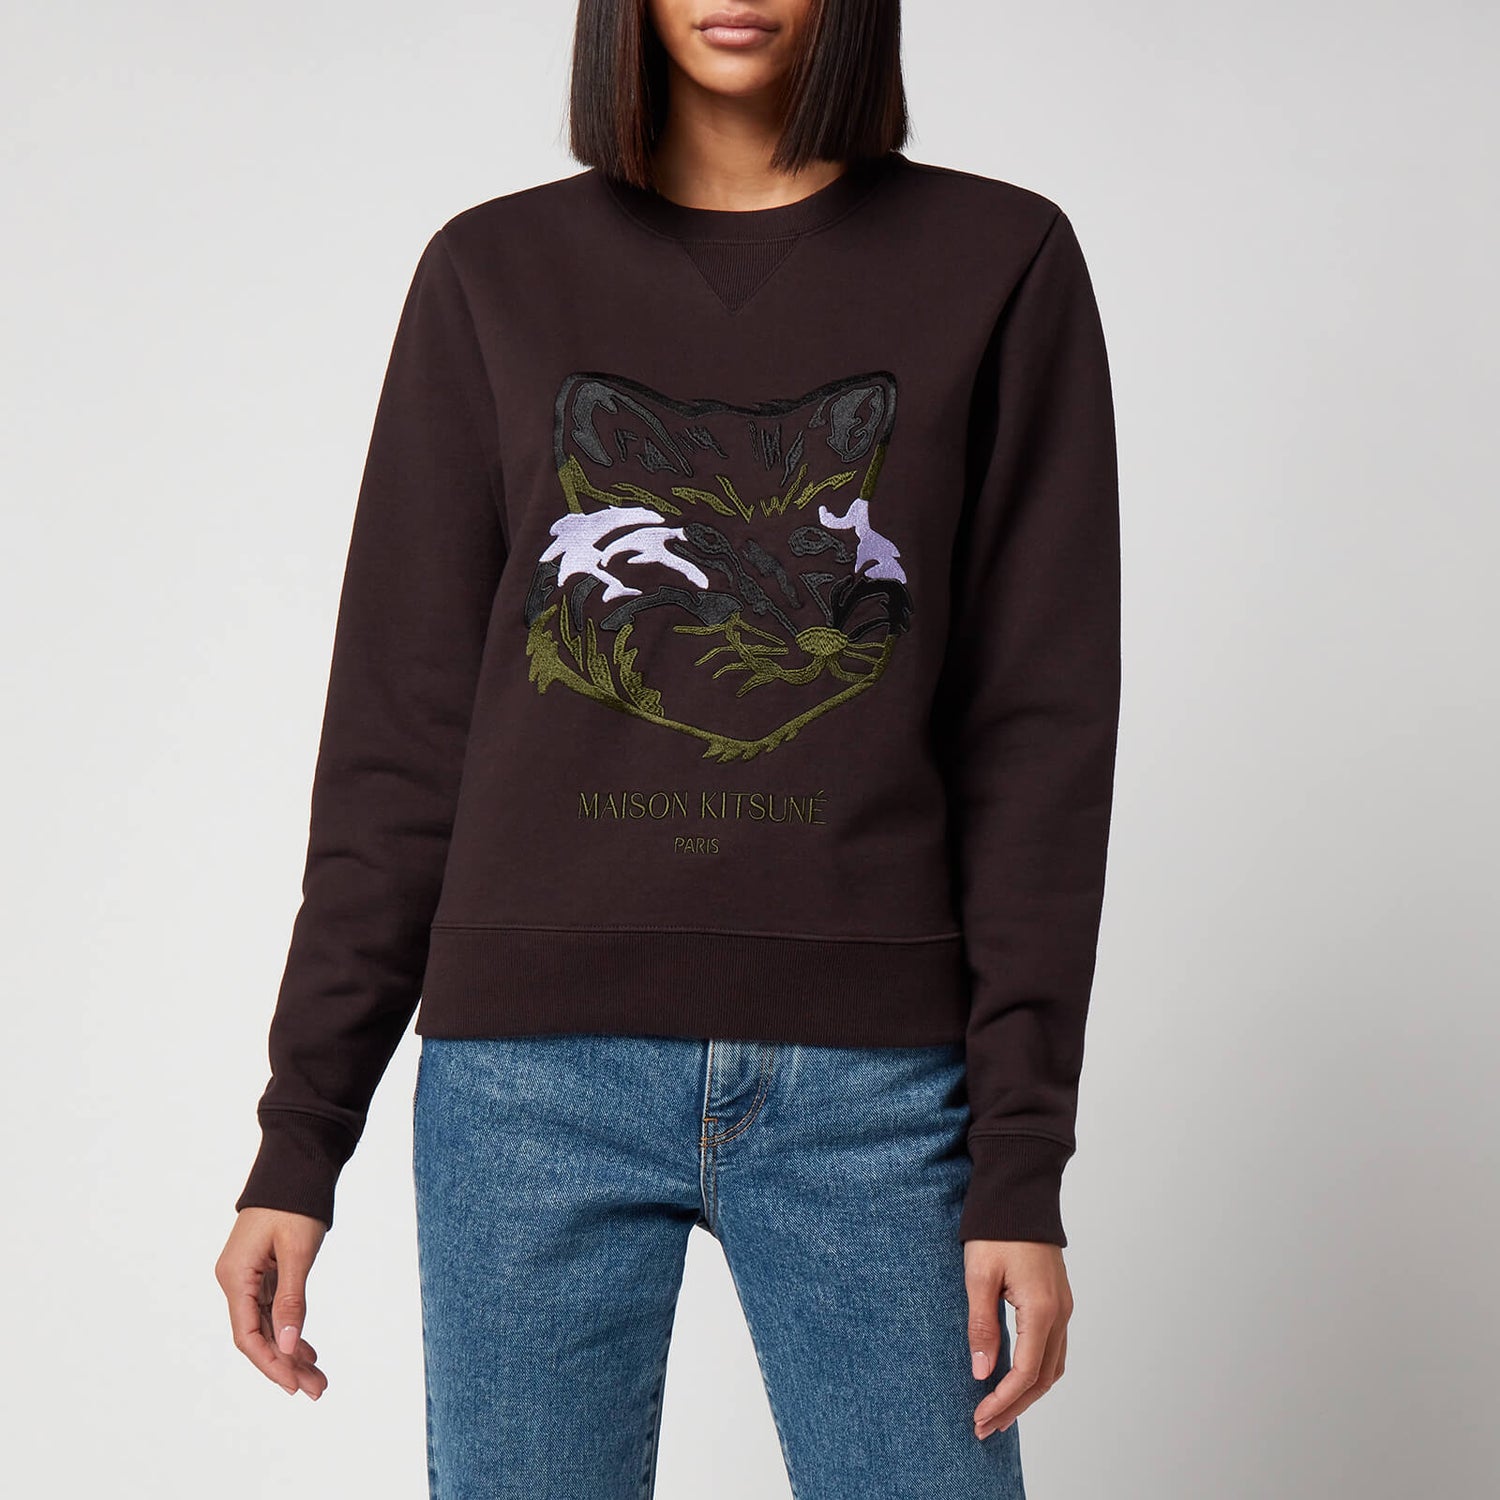 Maison Kitsuné Women's Big Fox Embroidery Regular Sweatshirt - Chocolate - XS